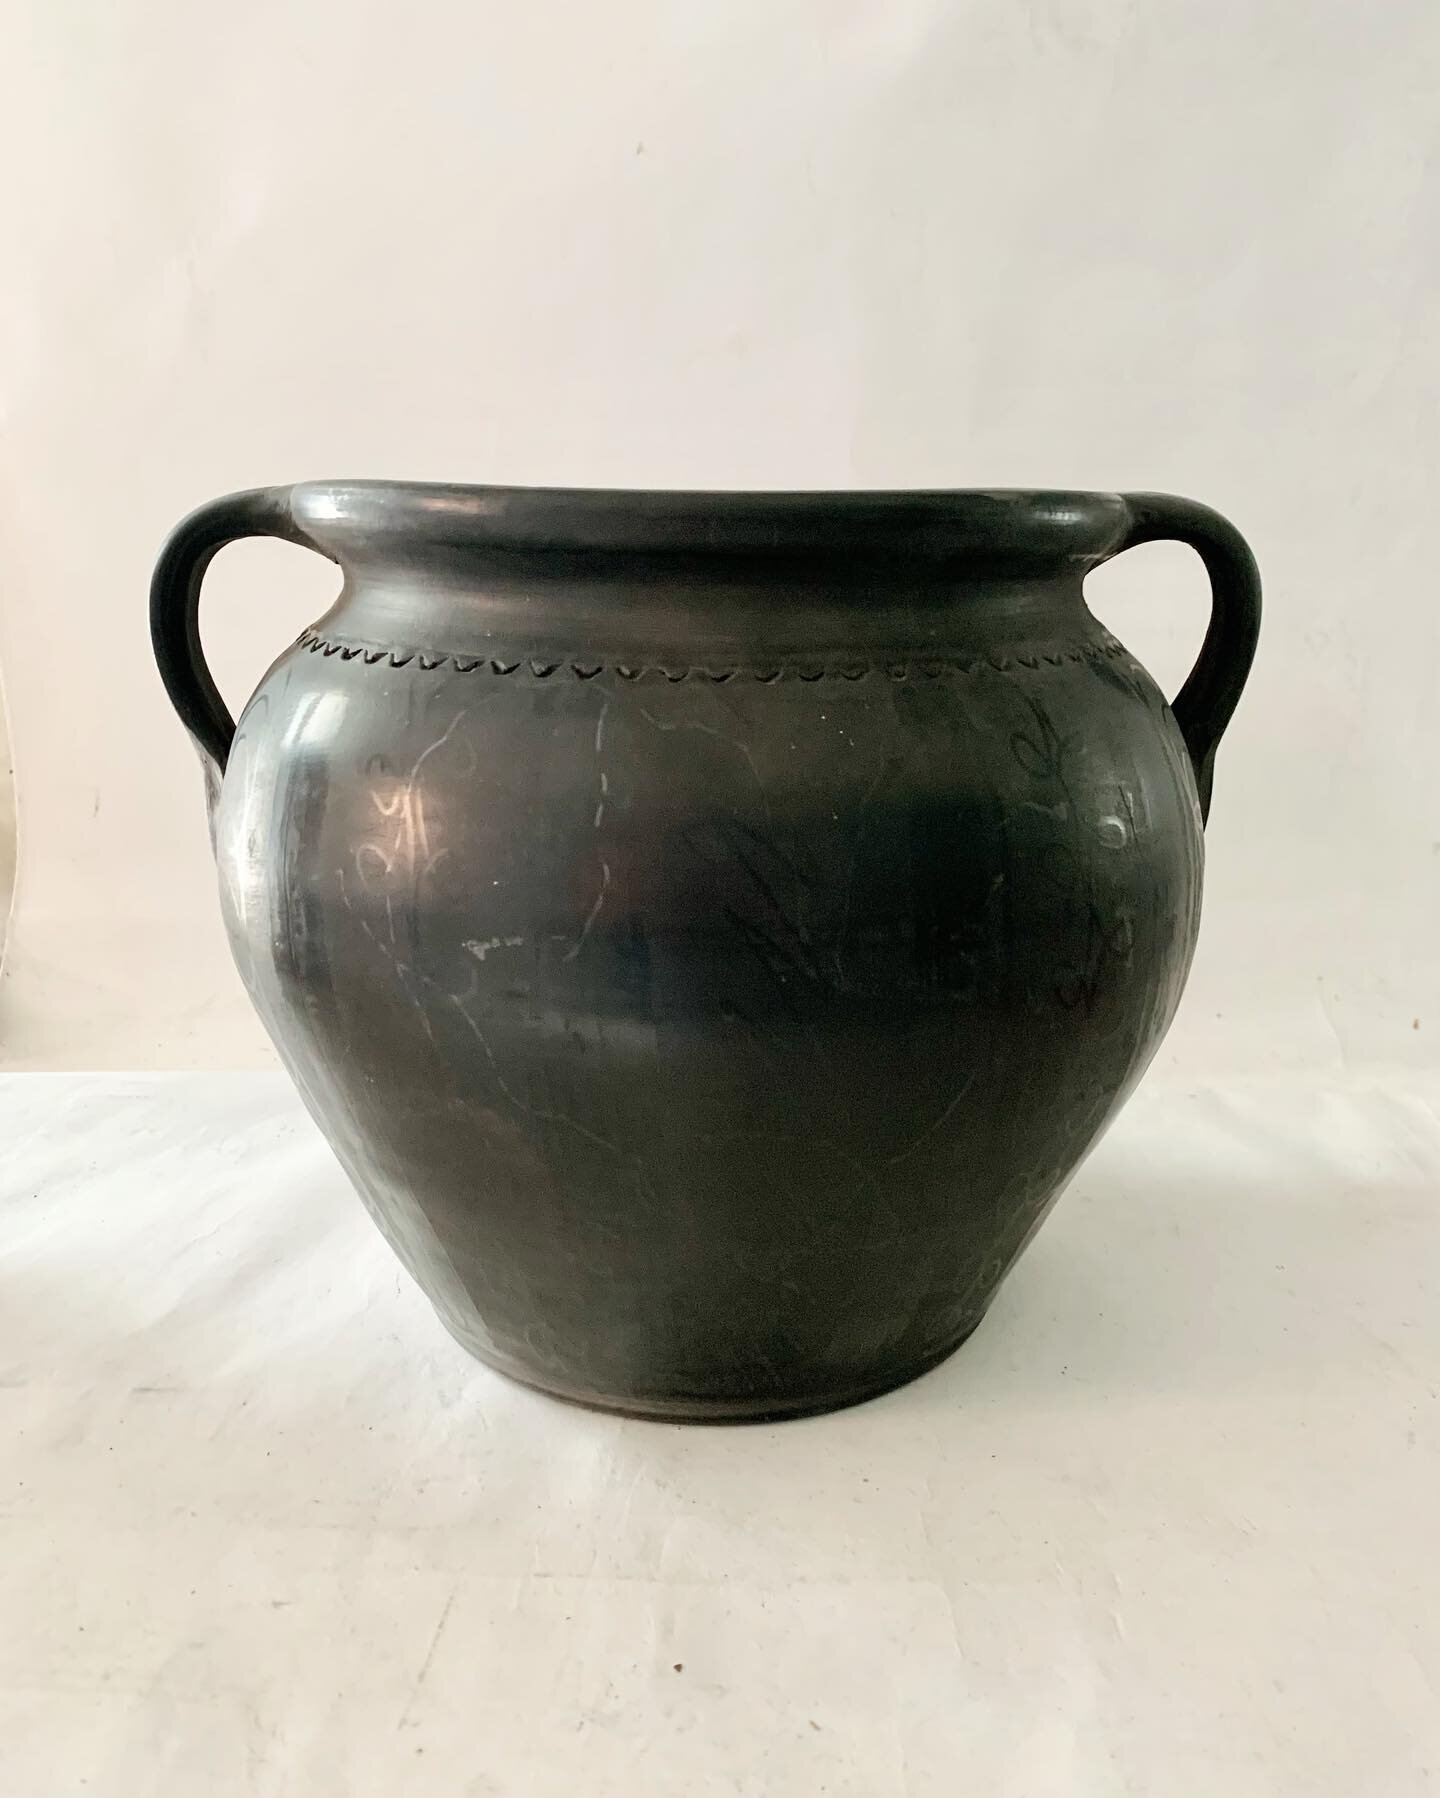 A great matte black urn form pottery vessel $165.00 #citycountrycottagechalet #farmhousedecor #interiors #kitchendesign #modernfarmhouse #props #vintagefineobjects #dmforinq